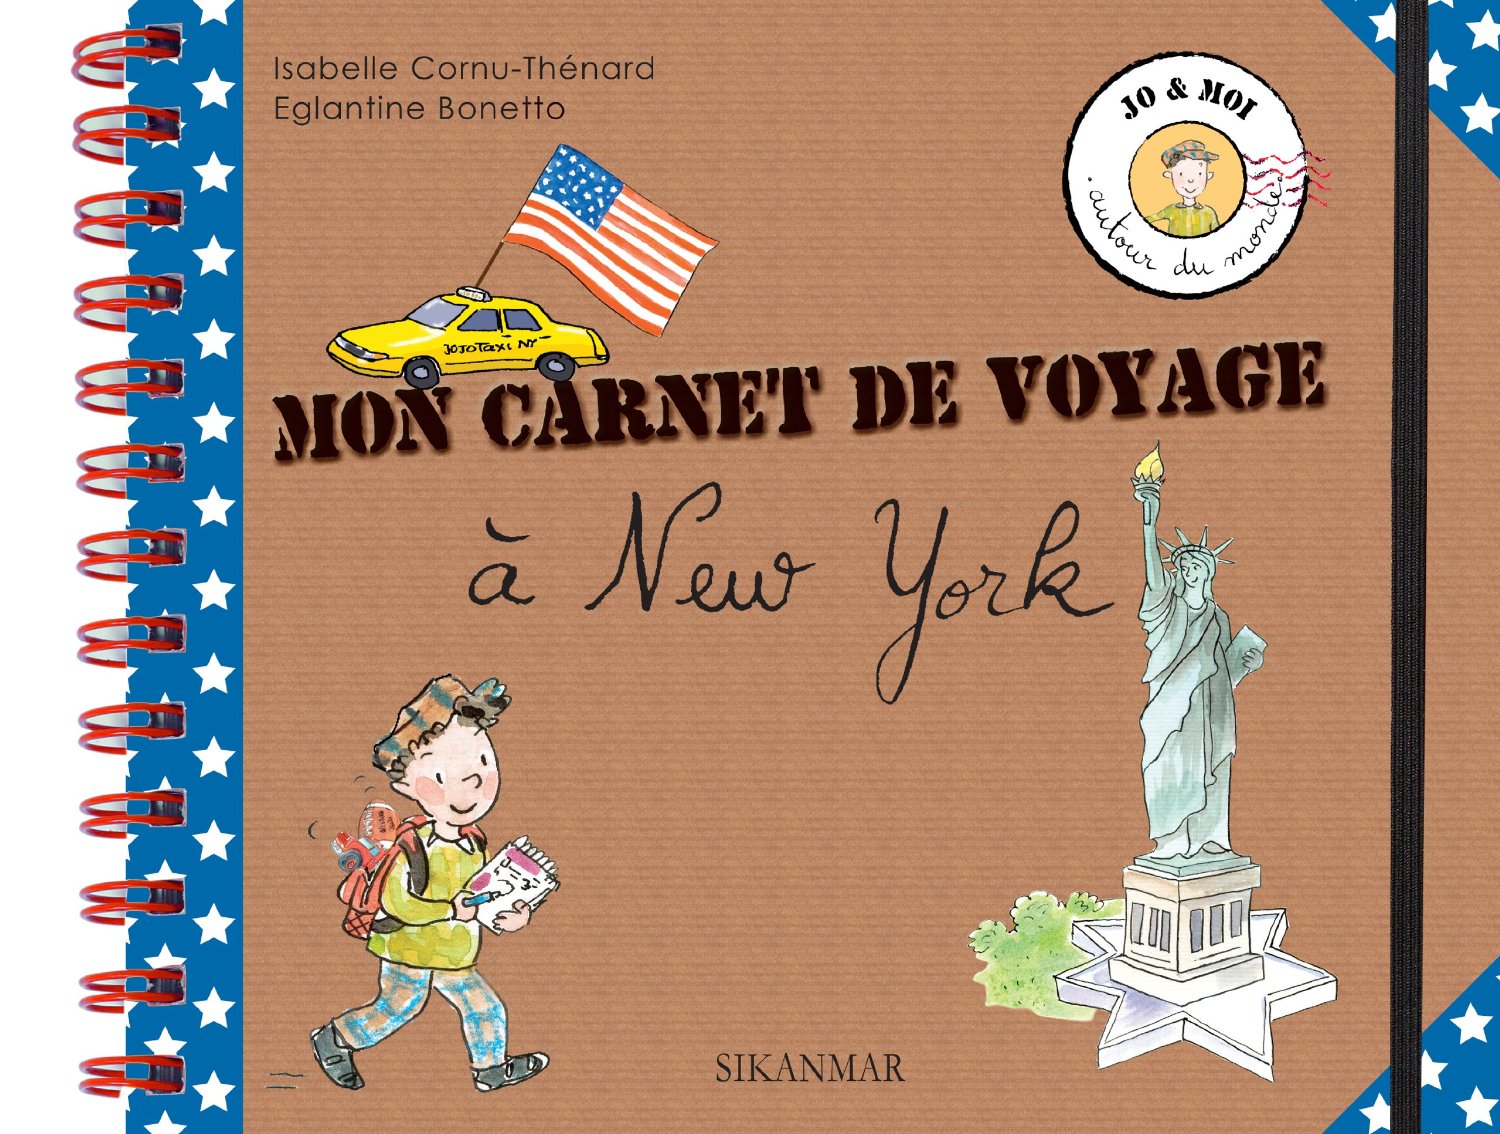 carnet voyage New york enfant Jo et moi Guide de voyage pour enfant avis blog | Blog VOYAGES ET ENFANTS